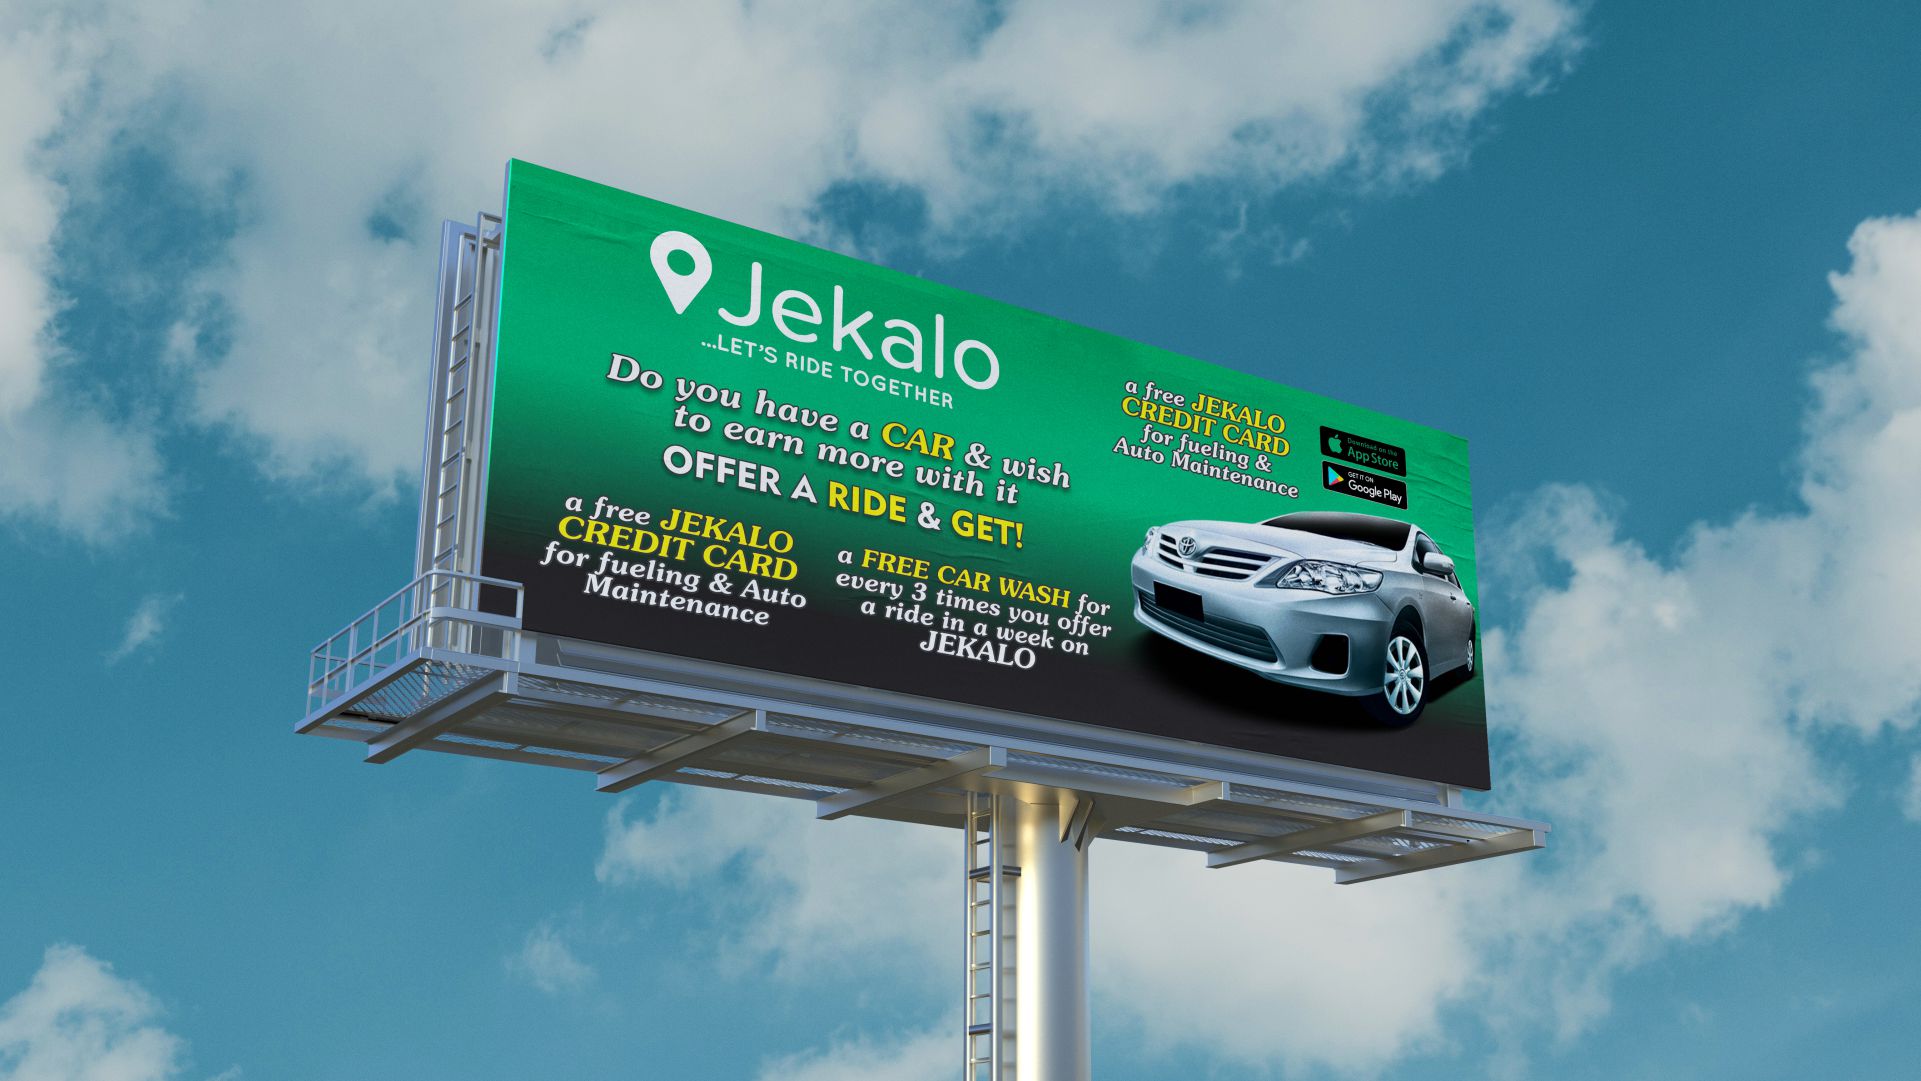 jekalo billboard branding and design in lagos nigeria